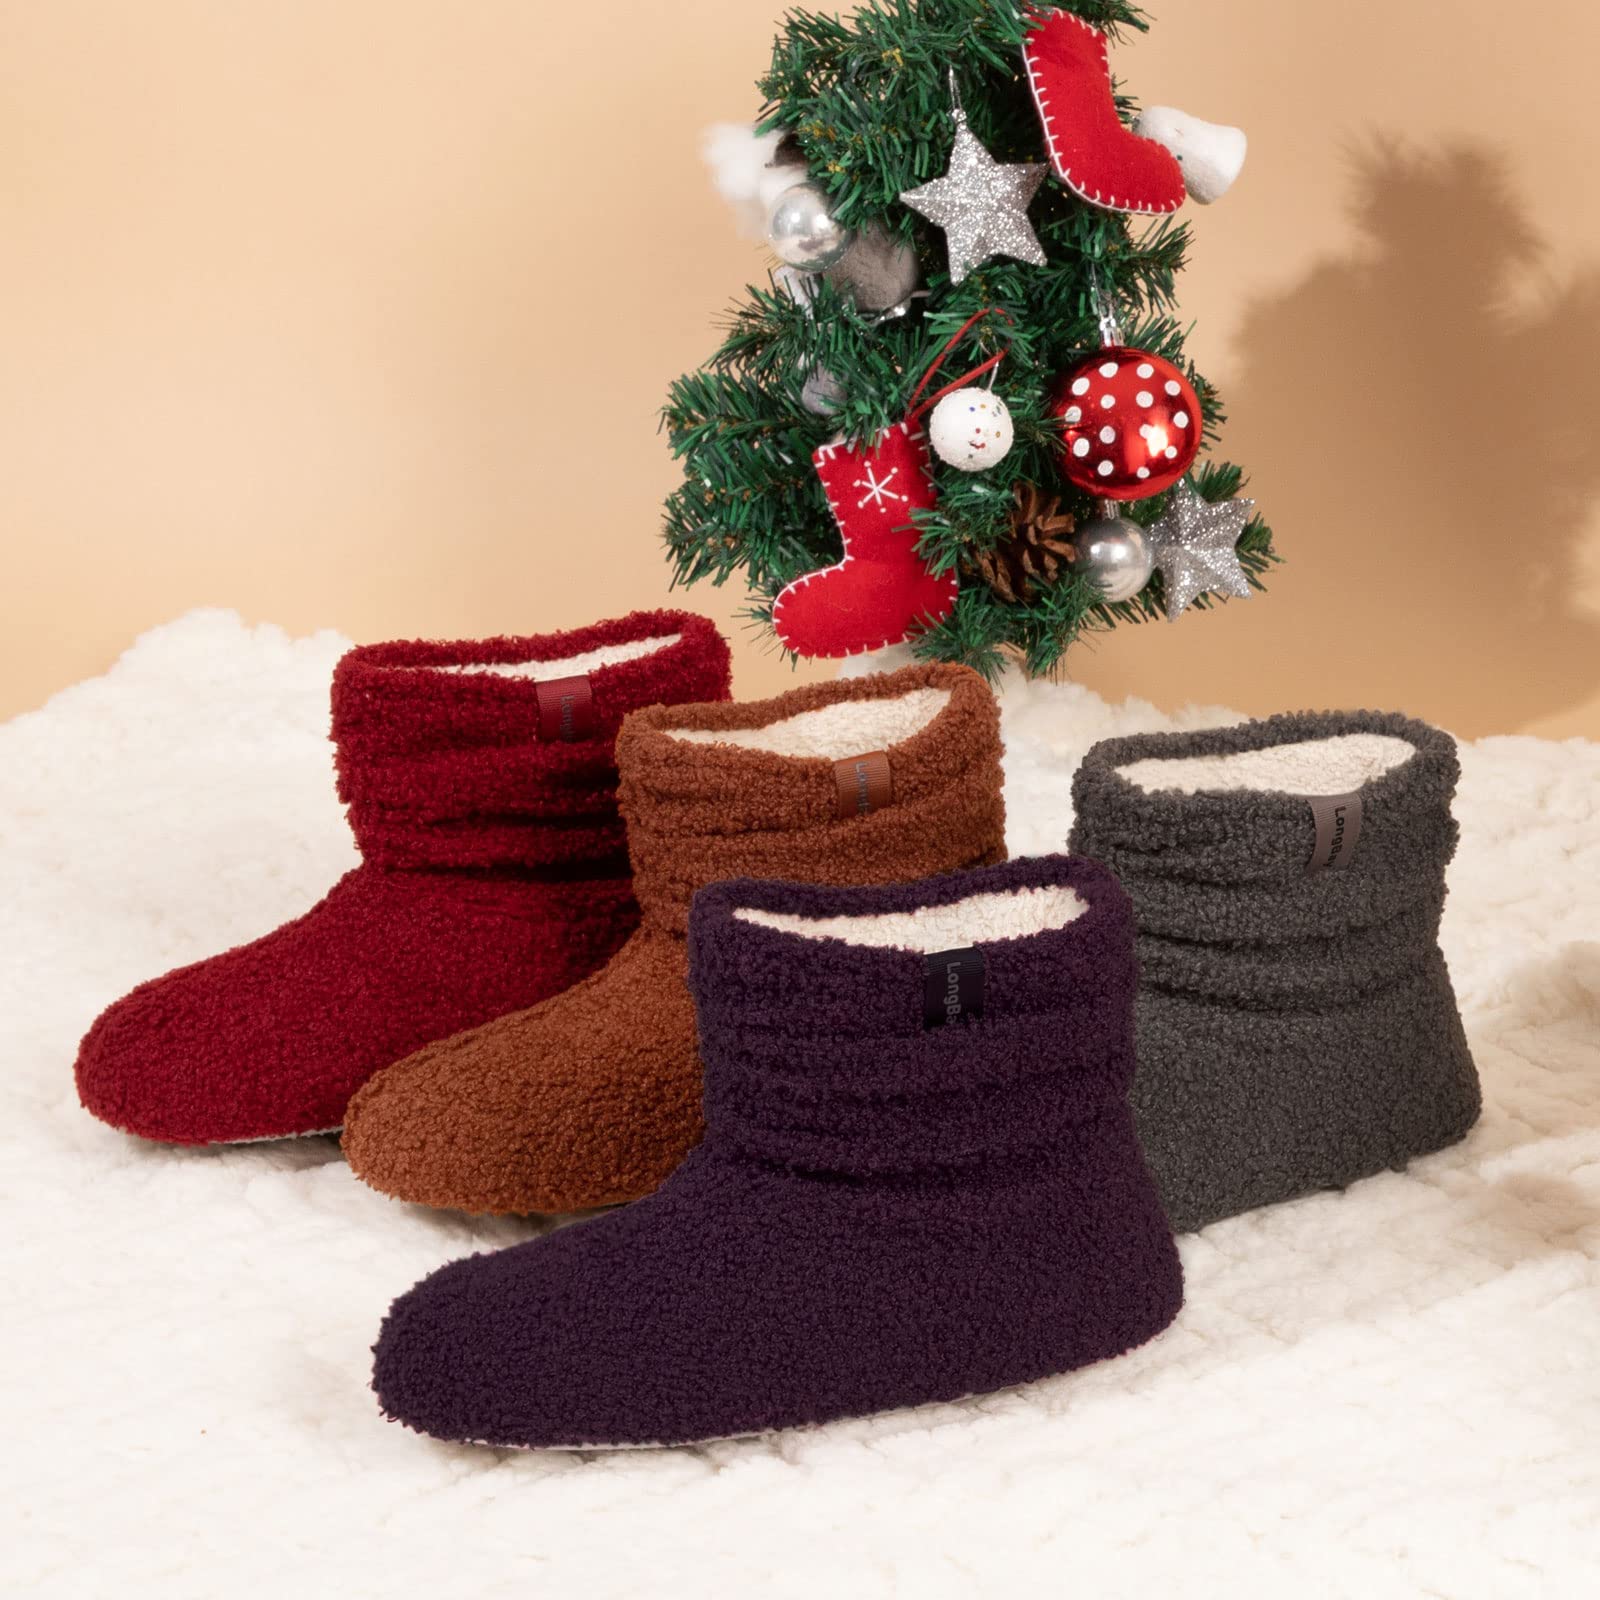 LongBay Women’s Warm Curly Fur Bootie Slippers Comfy Plush Fleece Boots Memory Foam House Shoes